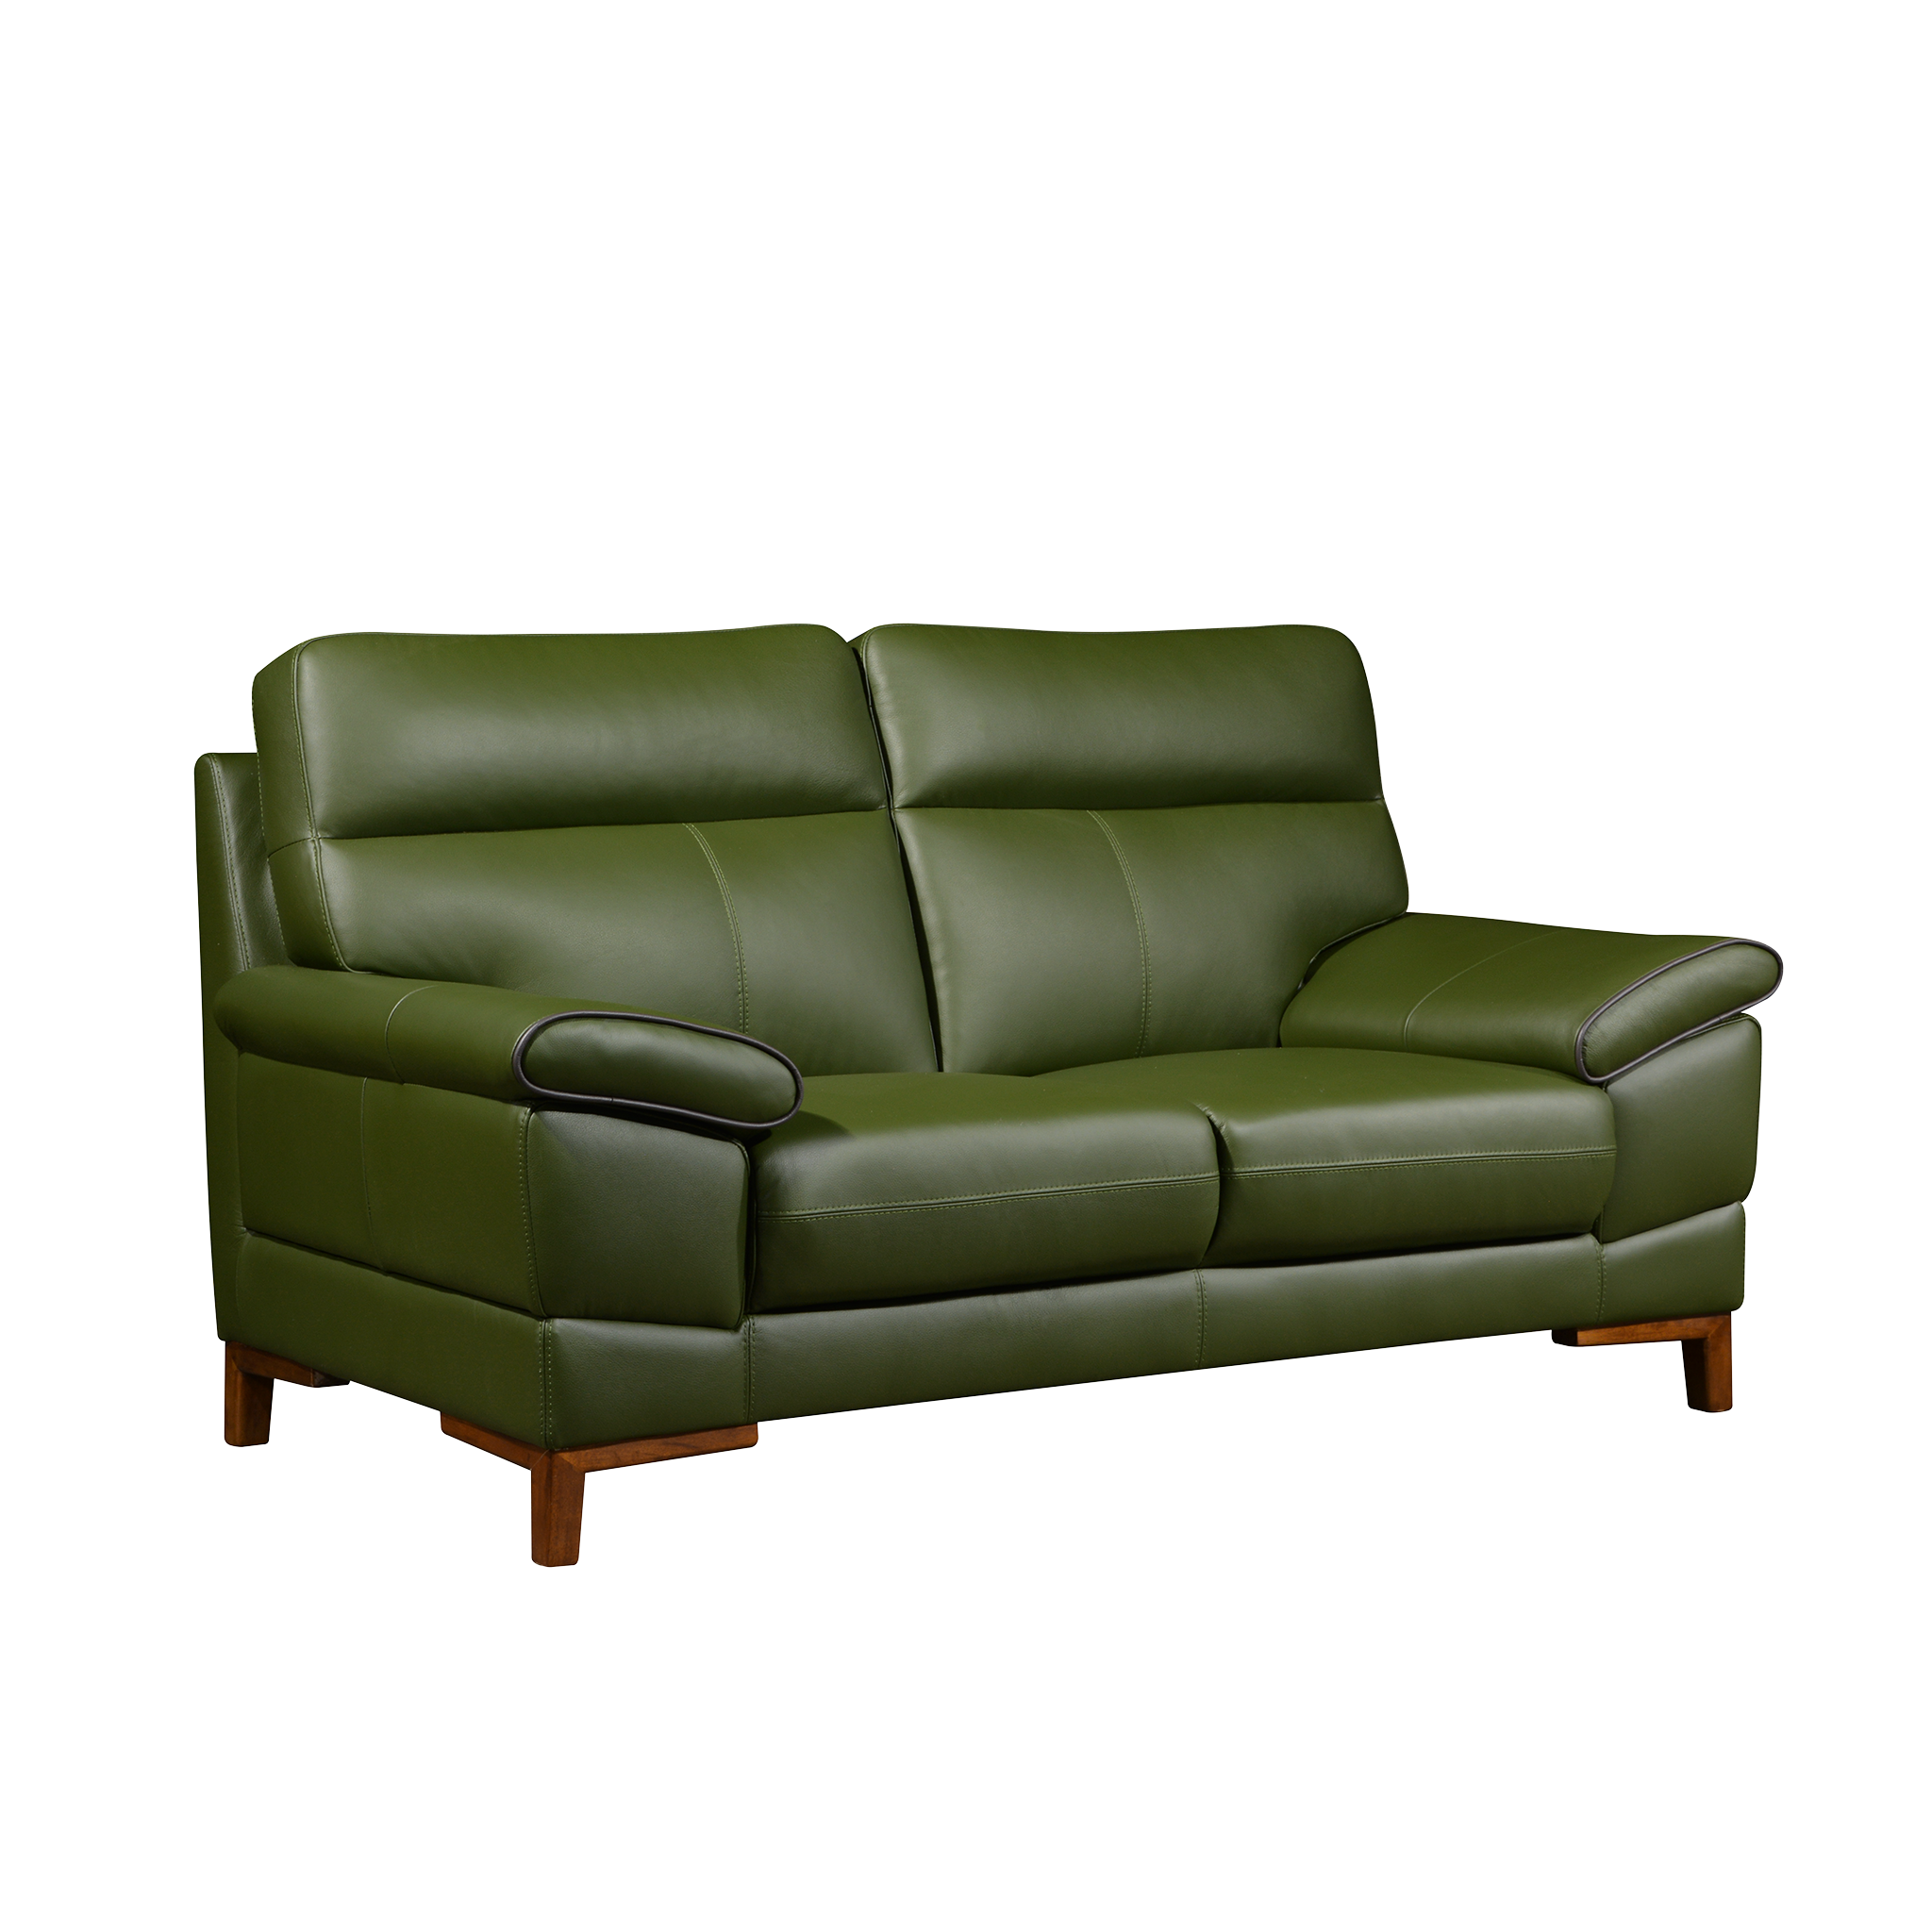 Ravenna 2 Seater Sofa, Full Leather